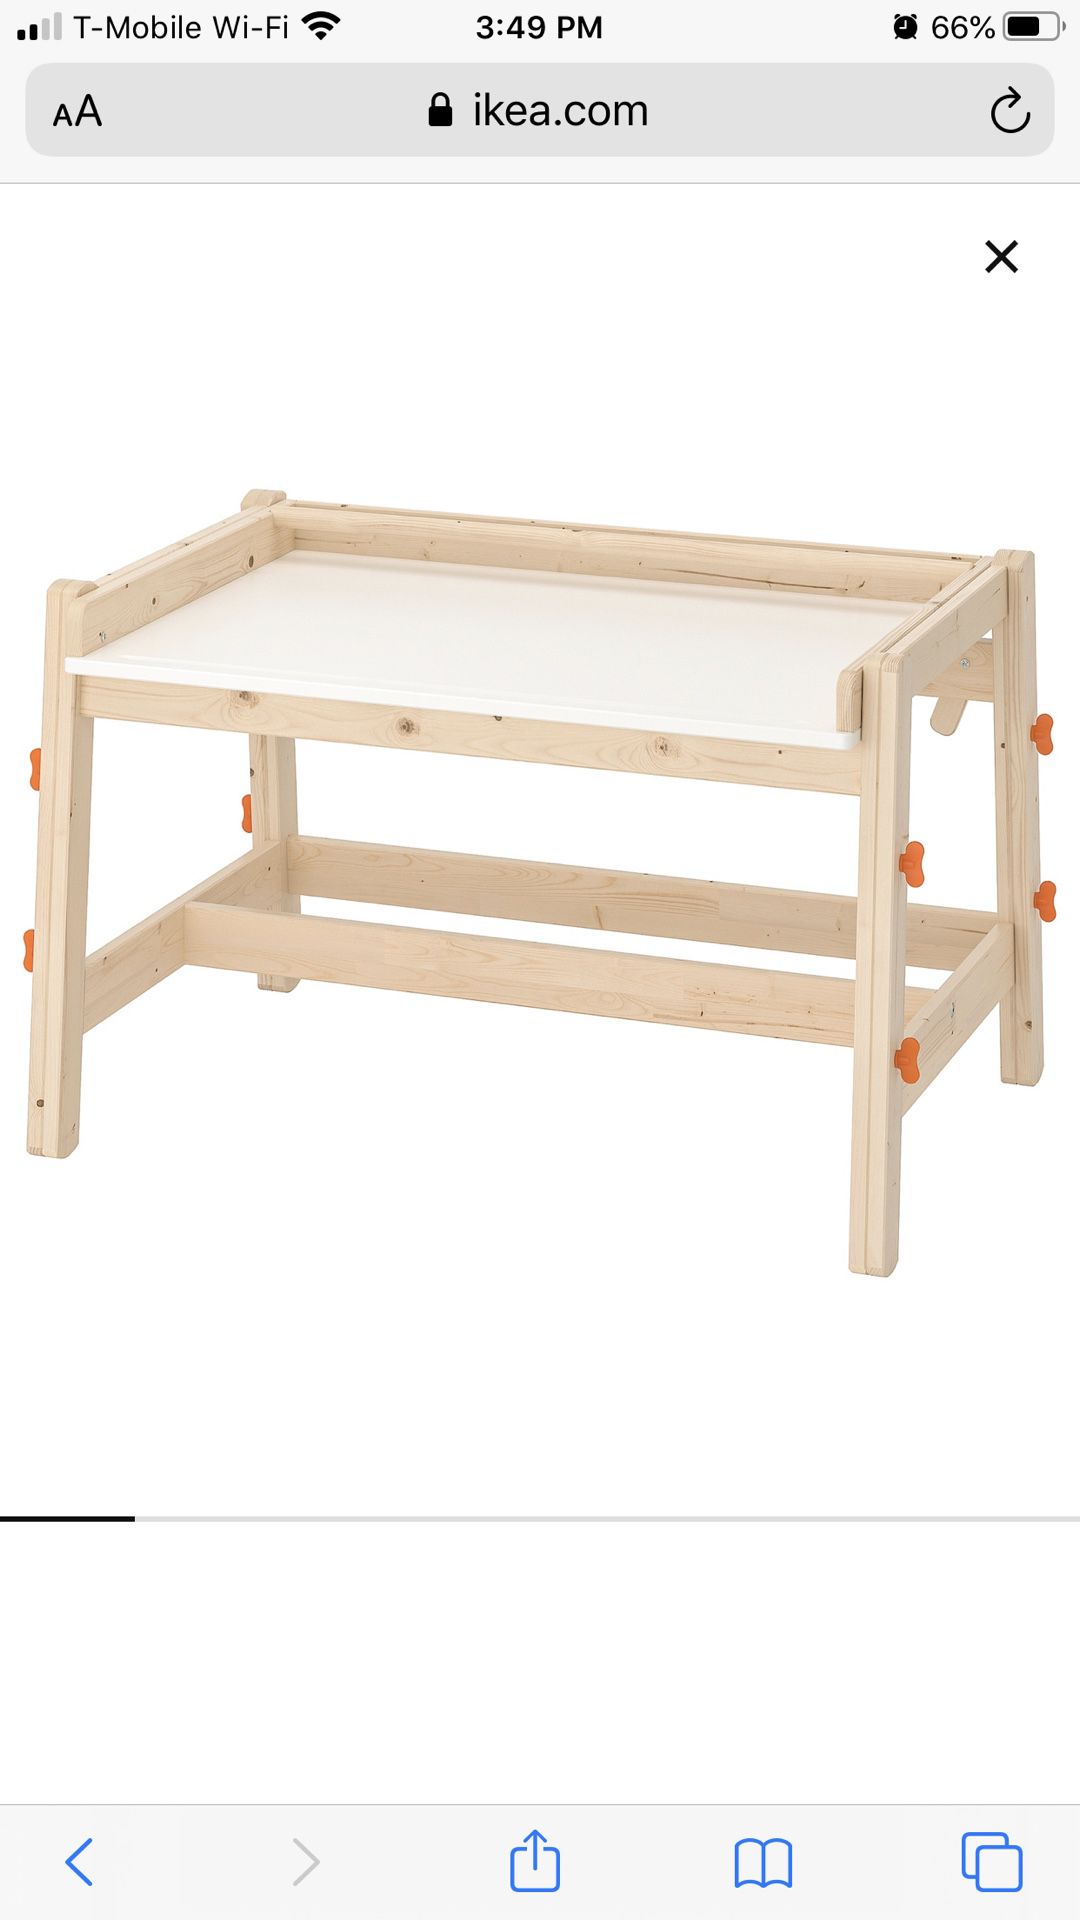 IKEA flisat children’s adjustable desk